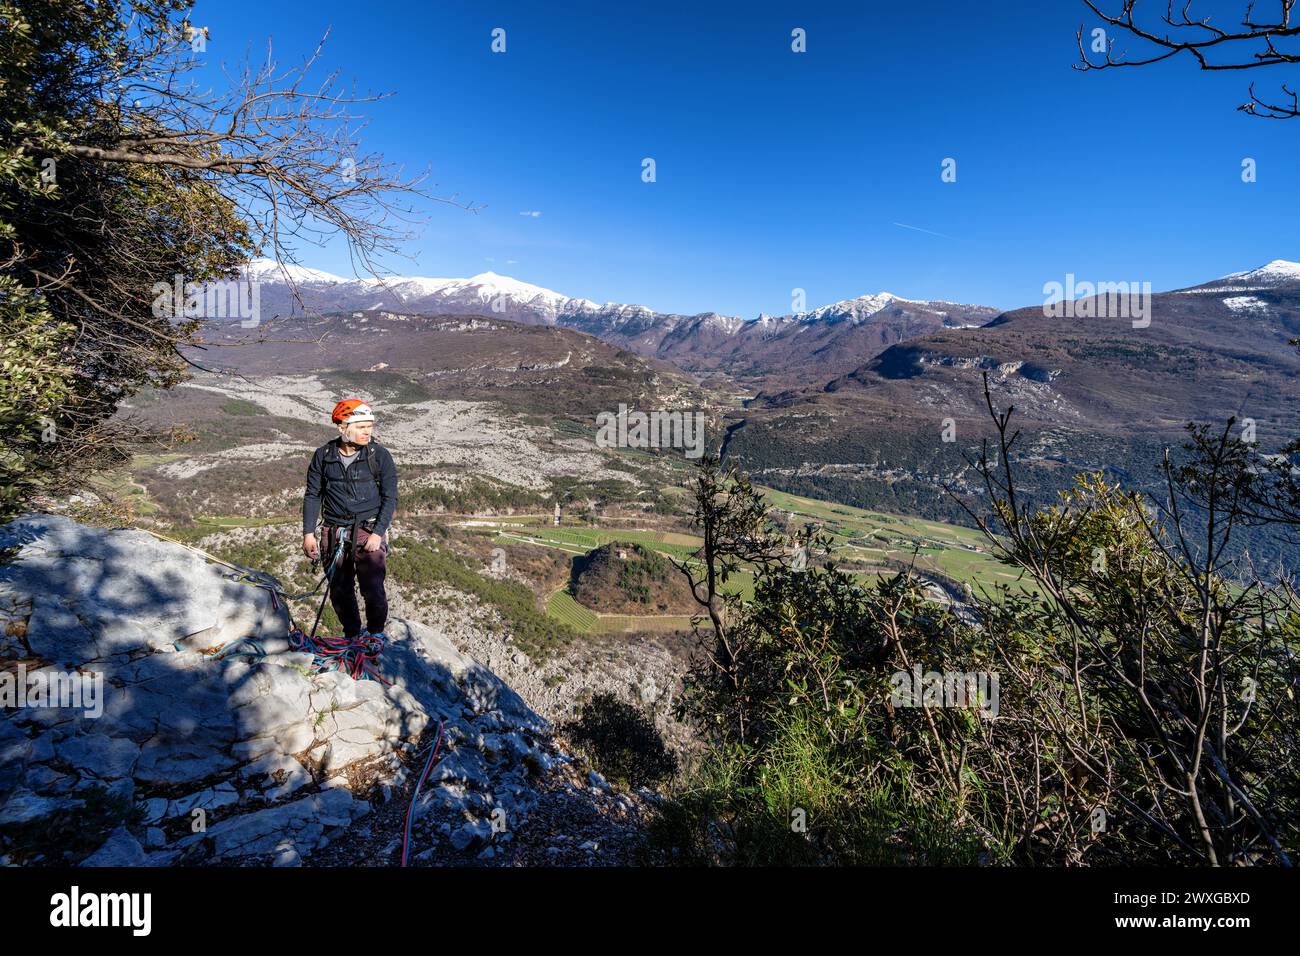 Rock climbing in Arco valley, Trentino, Italy Stock Photo